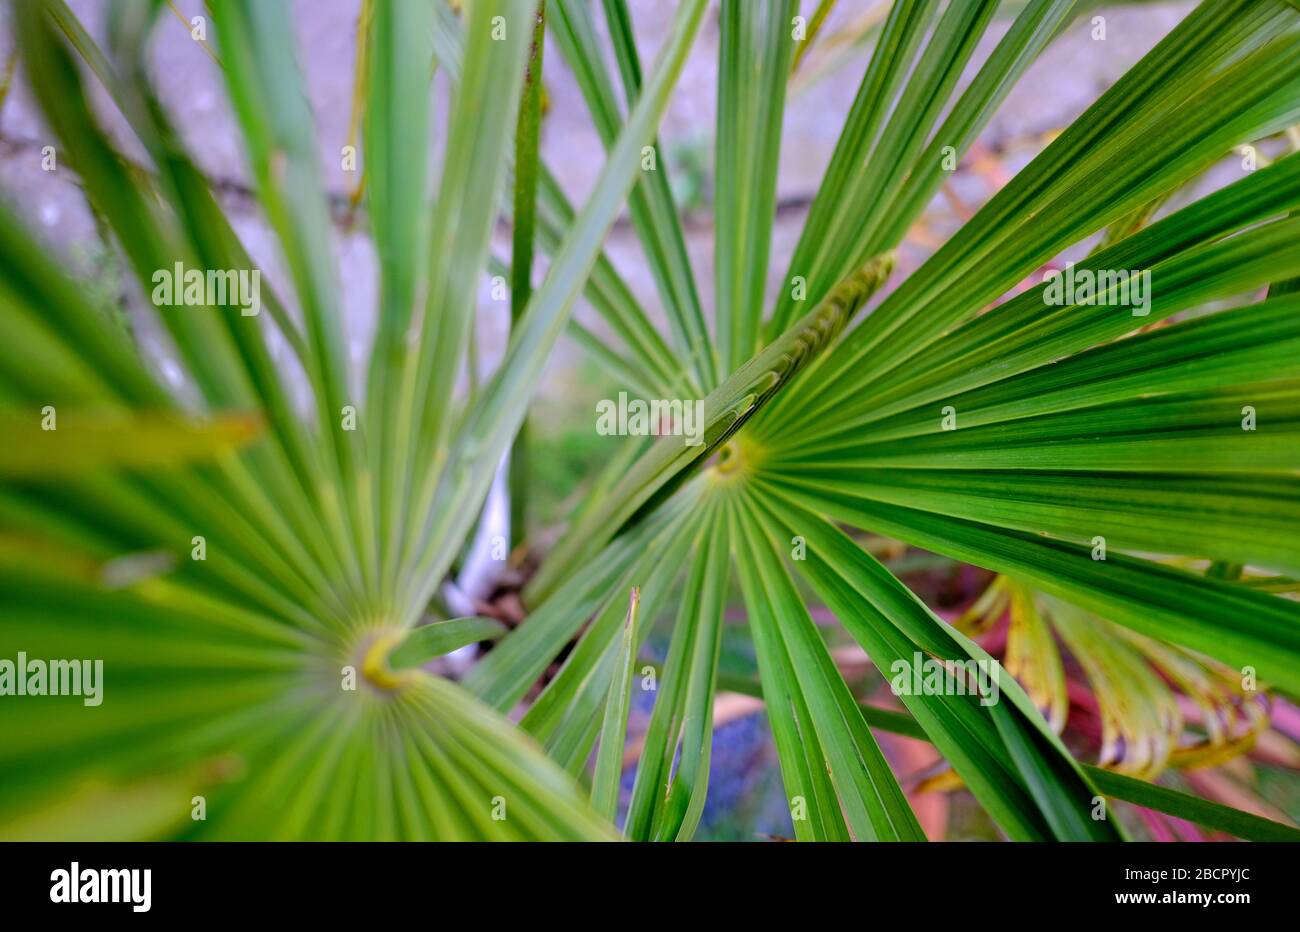 Trachycarpus Fortunei palm tree detail Stock Photo